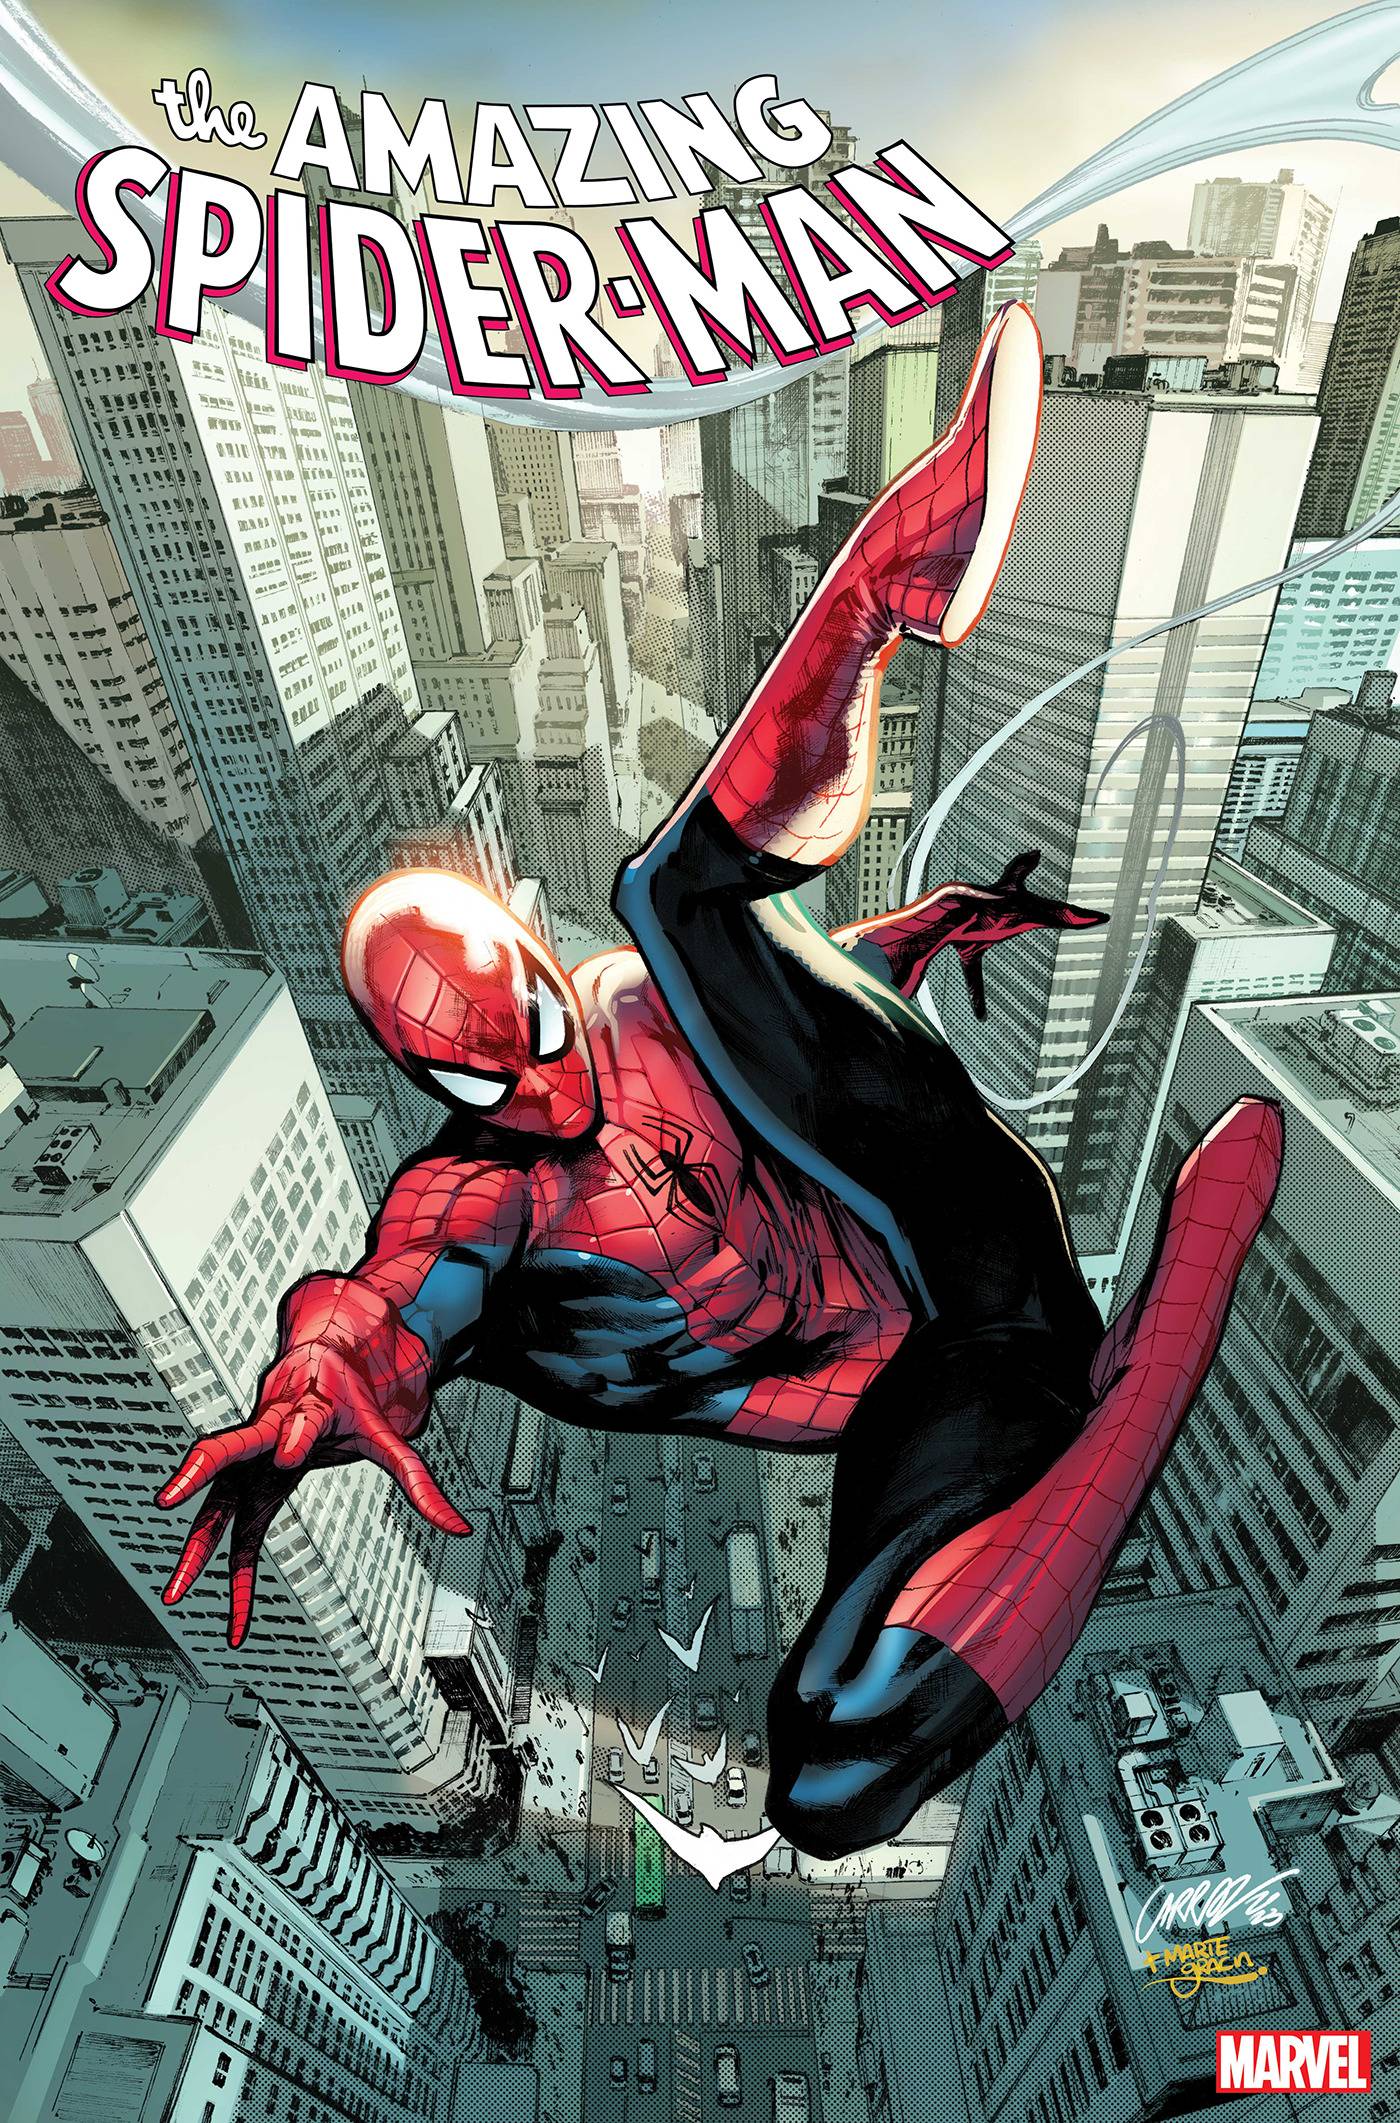 The Amazing Spider-Man|Paperback